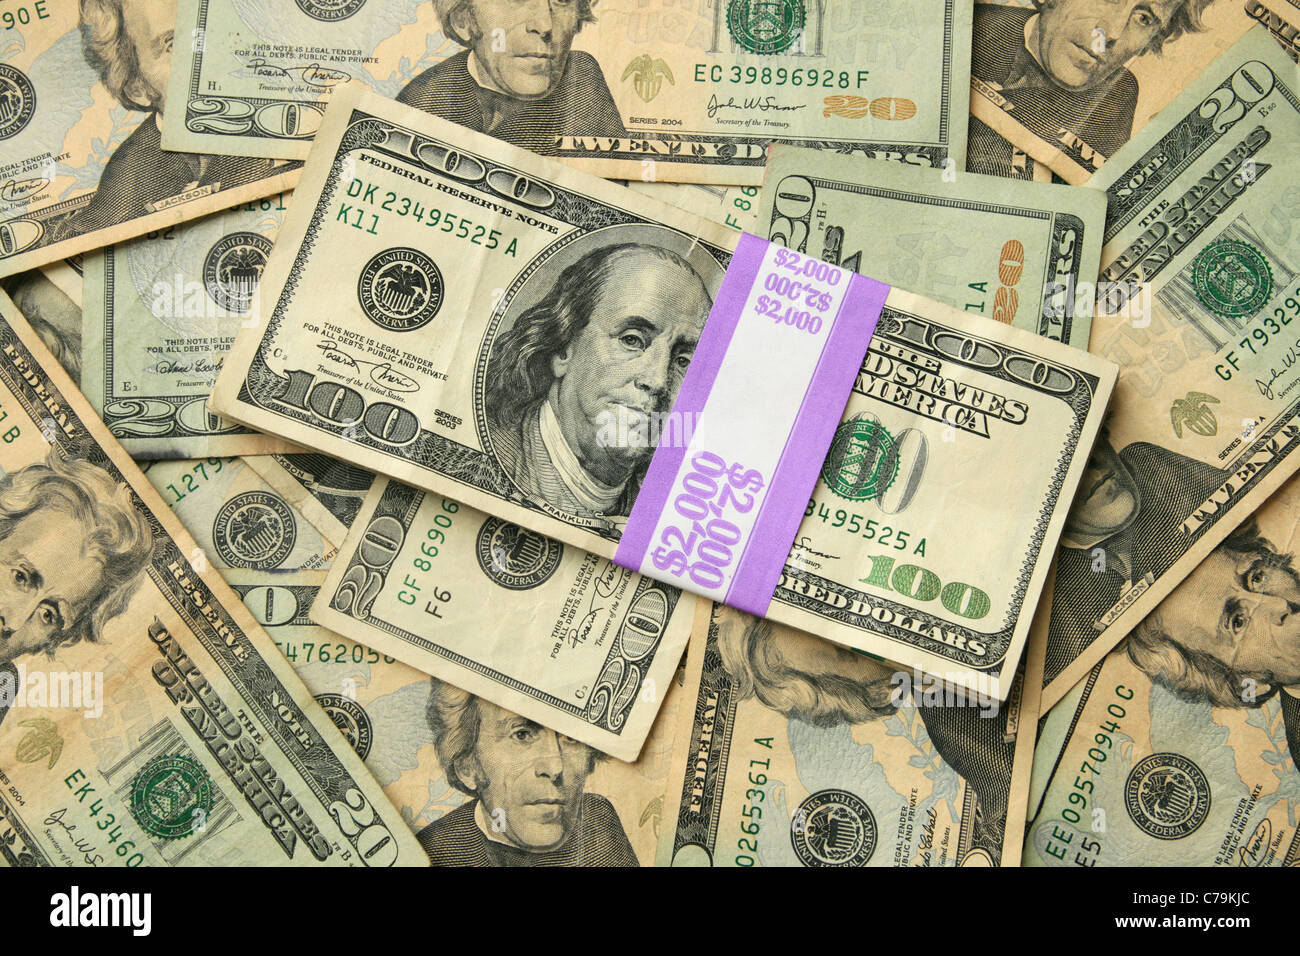 two thousand dollars in 100 bills on a background of twenty dollar US bills Stock Photo